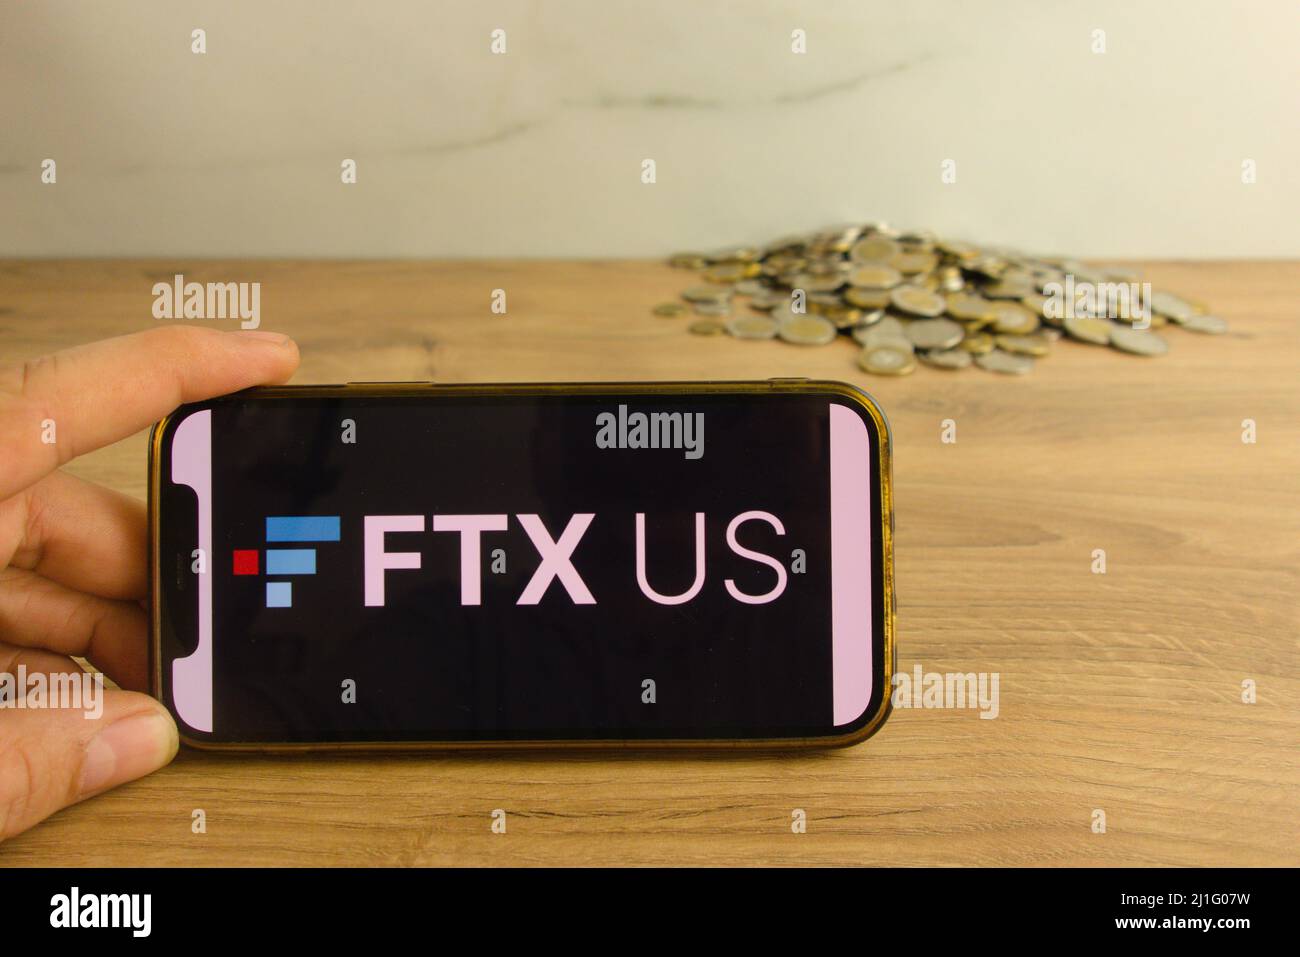 KONSKIE, POLEN - 20. März 2022: FTX US-Kryptowährungsbörse Logo auf dem Mobiltelefon. Online-Handel, Blockchain-Technologiekonzept Stockfoto